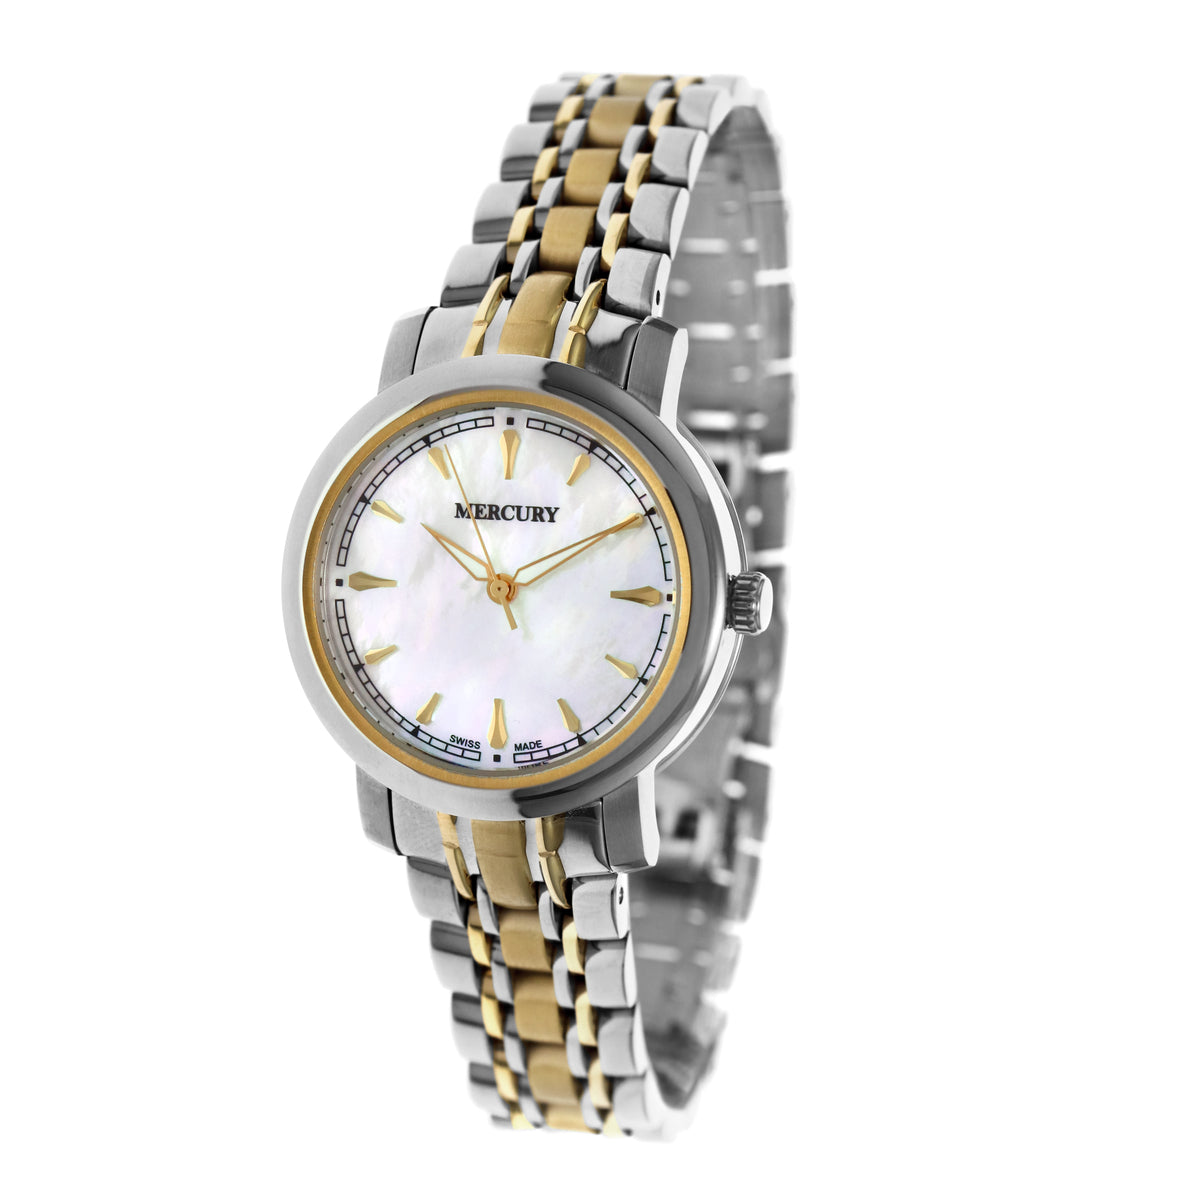 Mercury Women's Swiss Quartz Watch with Pearly White Dial - MER-0004